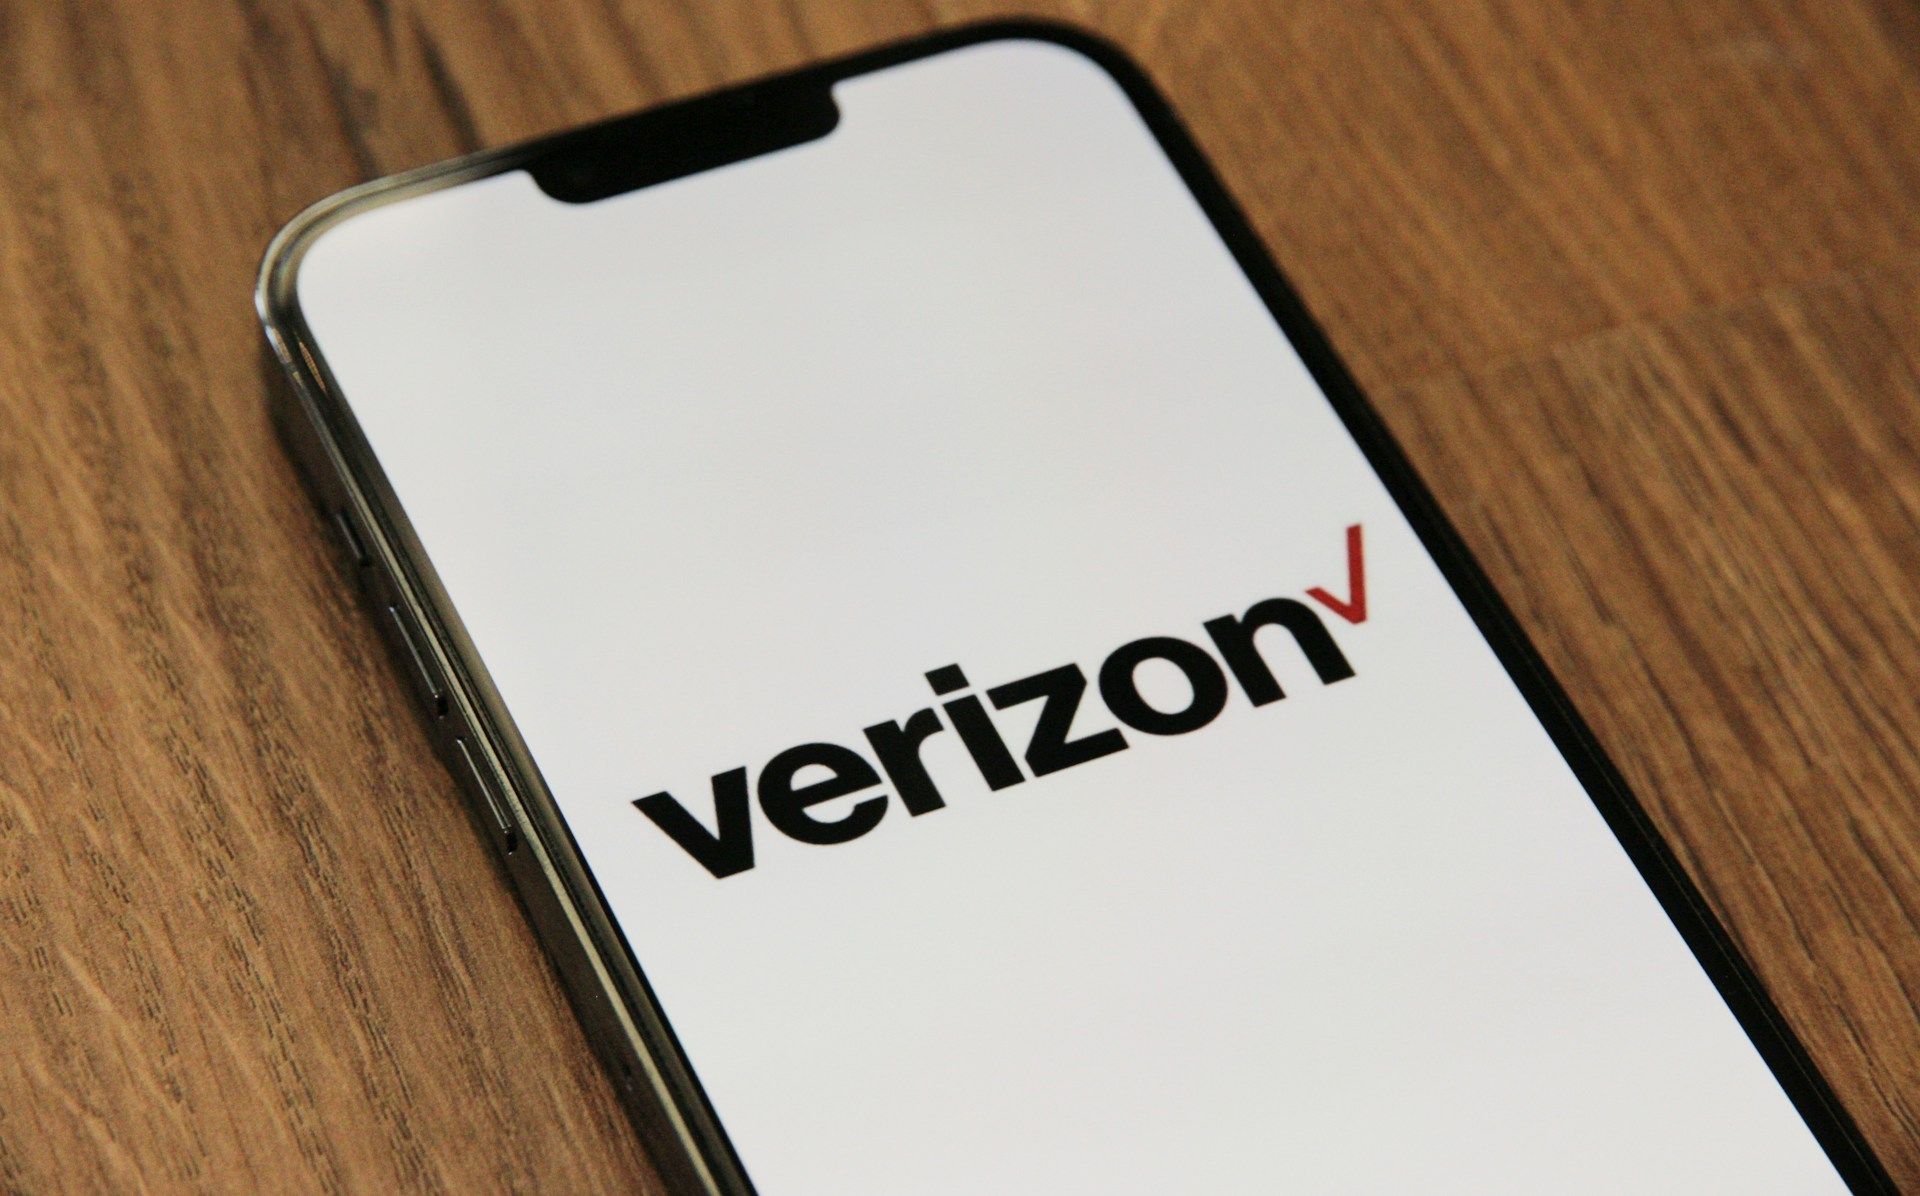 Image of the Verizon logo on a smartphone